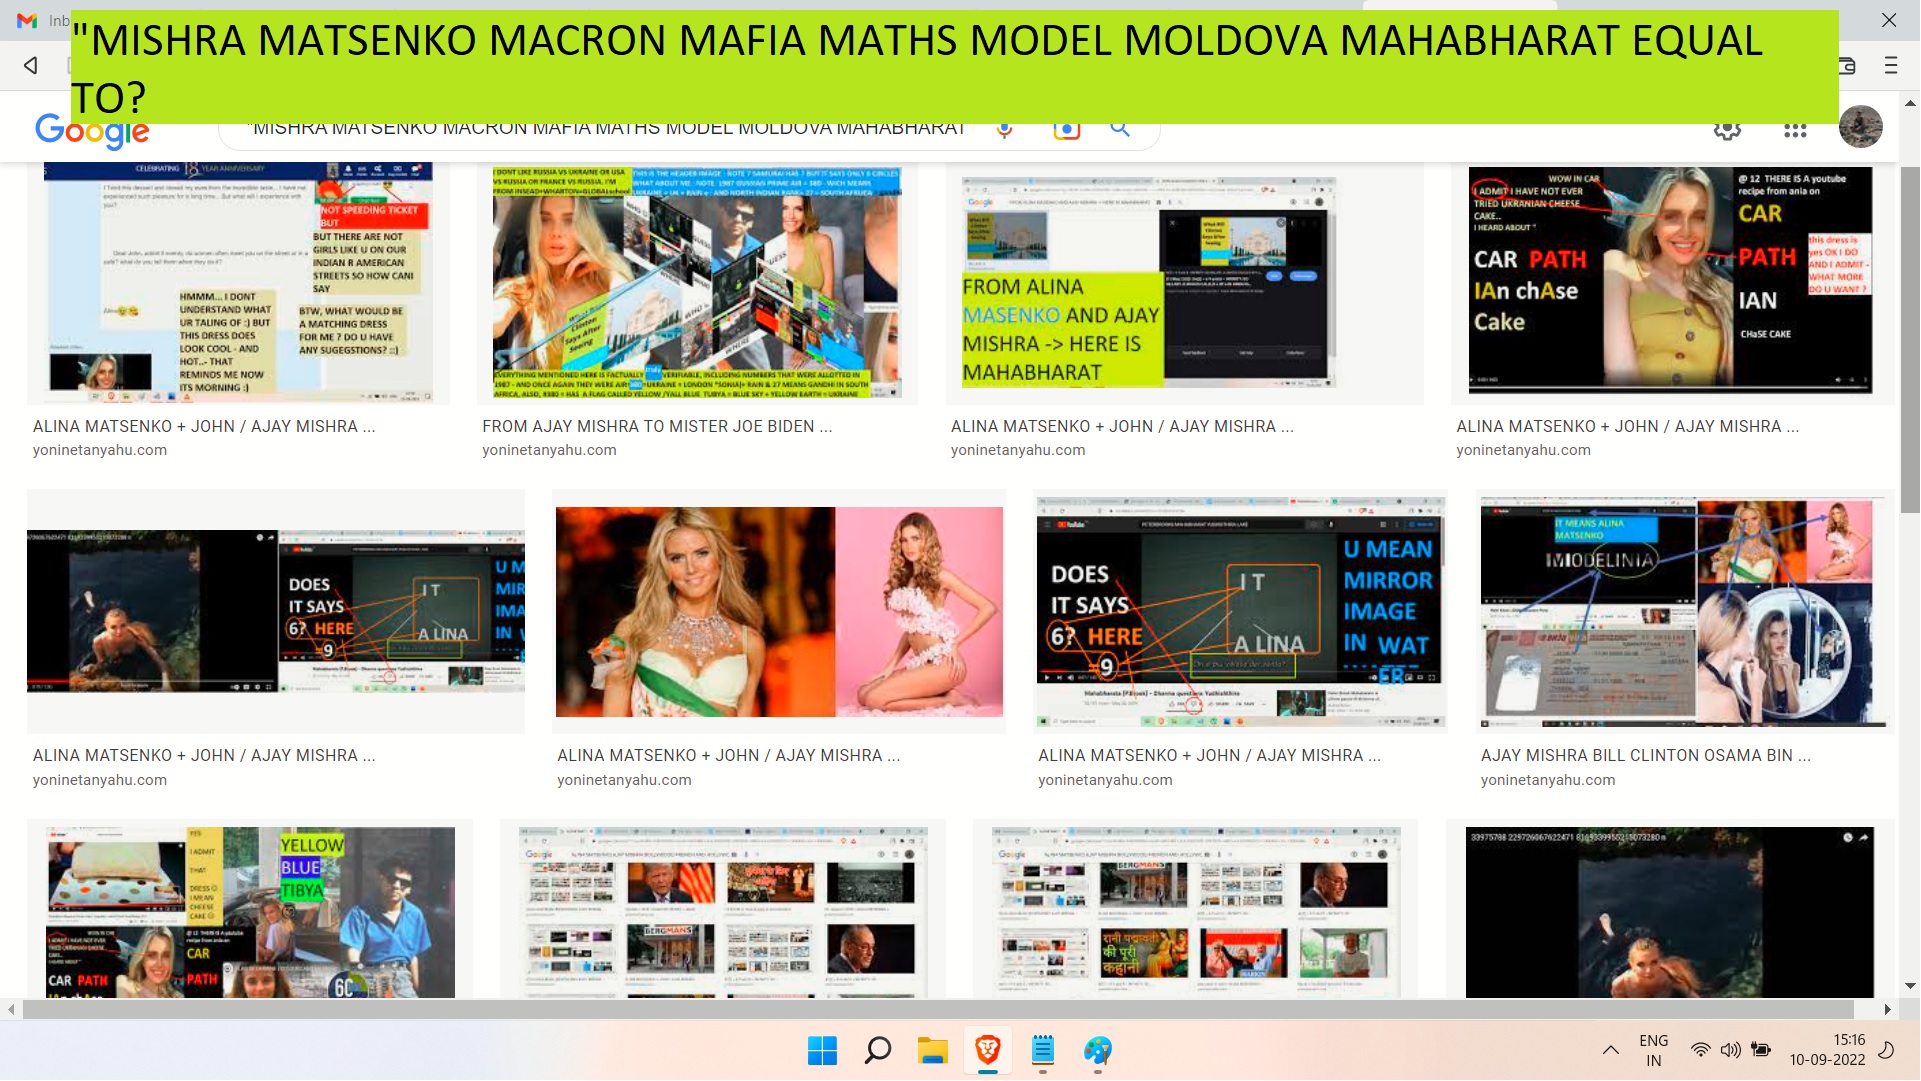 MISHRA MATSENKO MACRON MAFIA MATHS MODEL MOLDOVA MAHABHARAT EQUAL TO